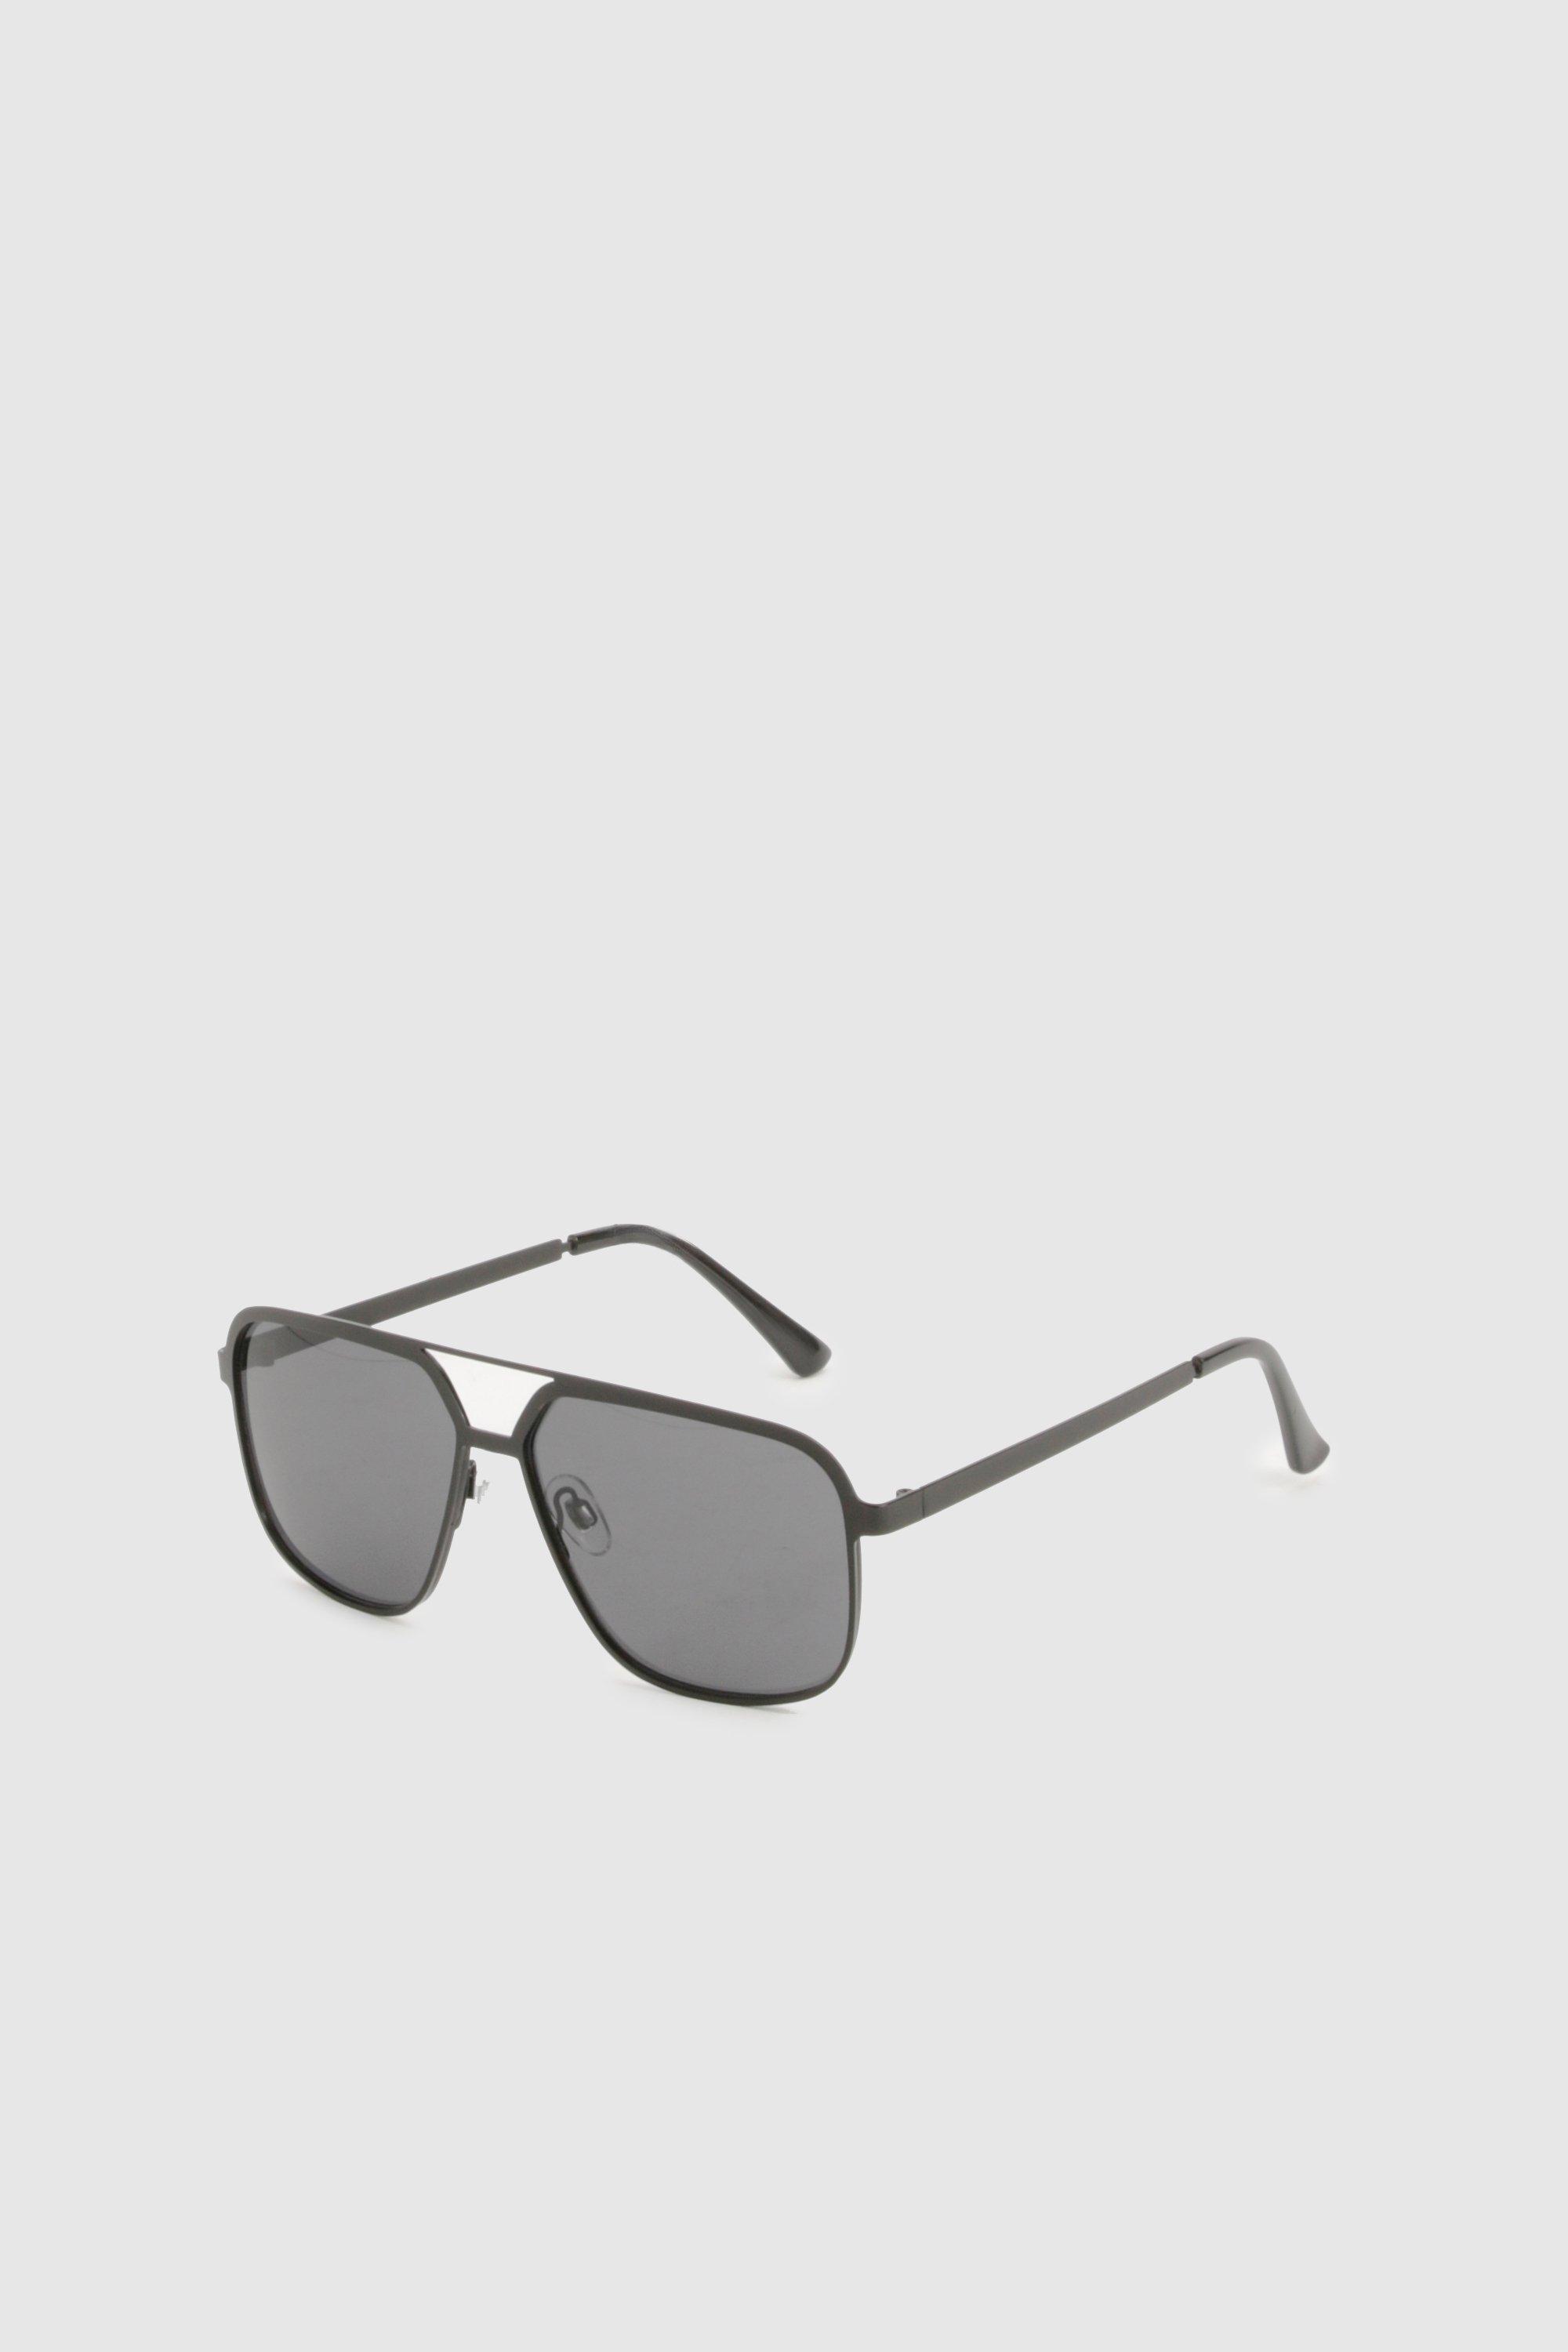 Image of Silver Tinted Oversized Aviator Sunglasses, Grigio